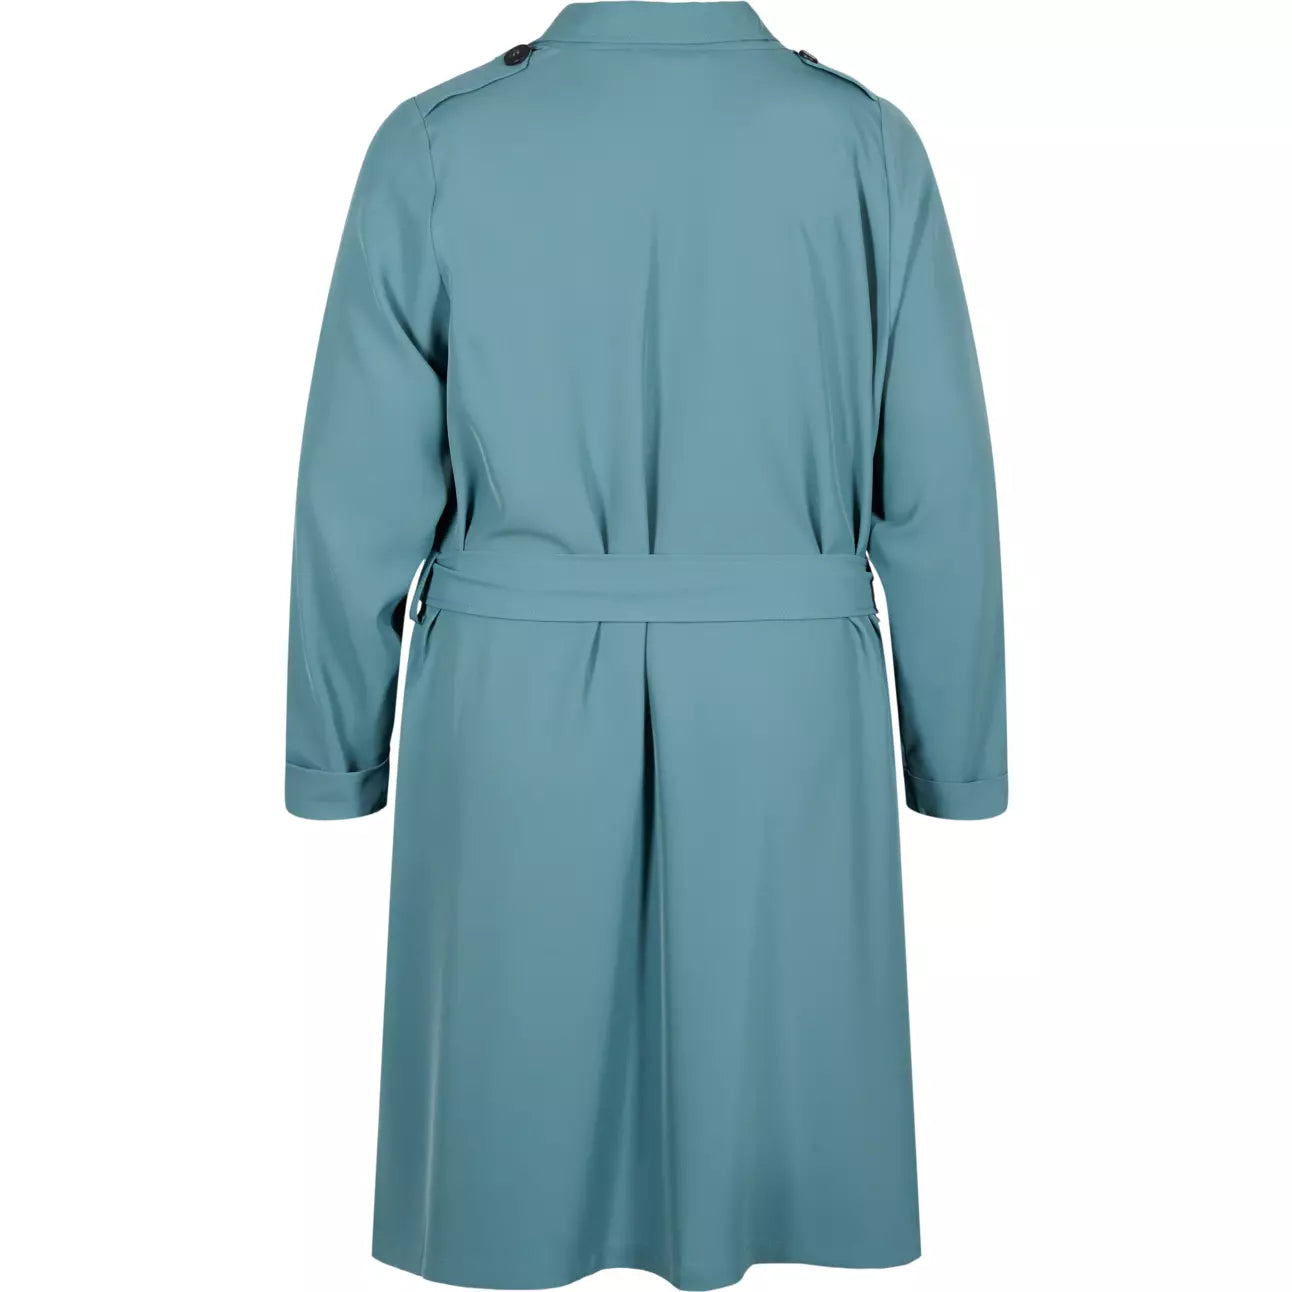 Zizzi Trench Coat in Sage Green - Wardrobe Plus